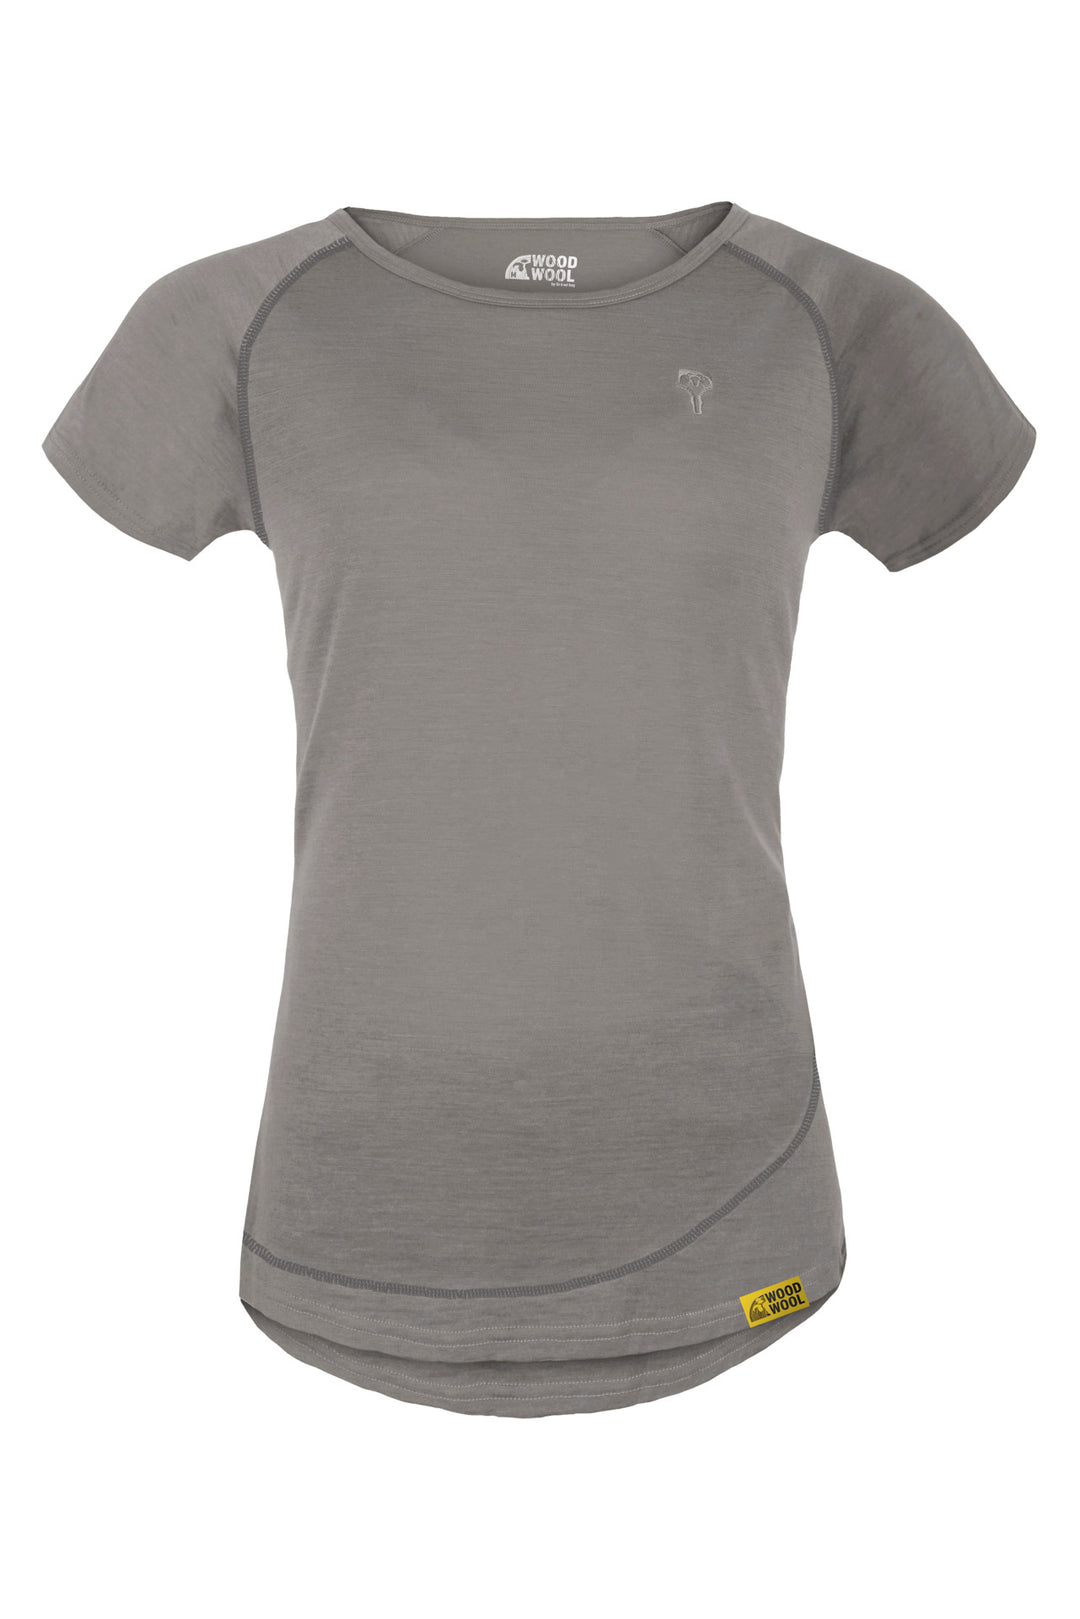 WoodWool T-Shirt Lady Burnham | Slate Grey